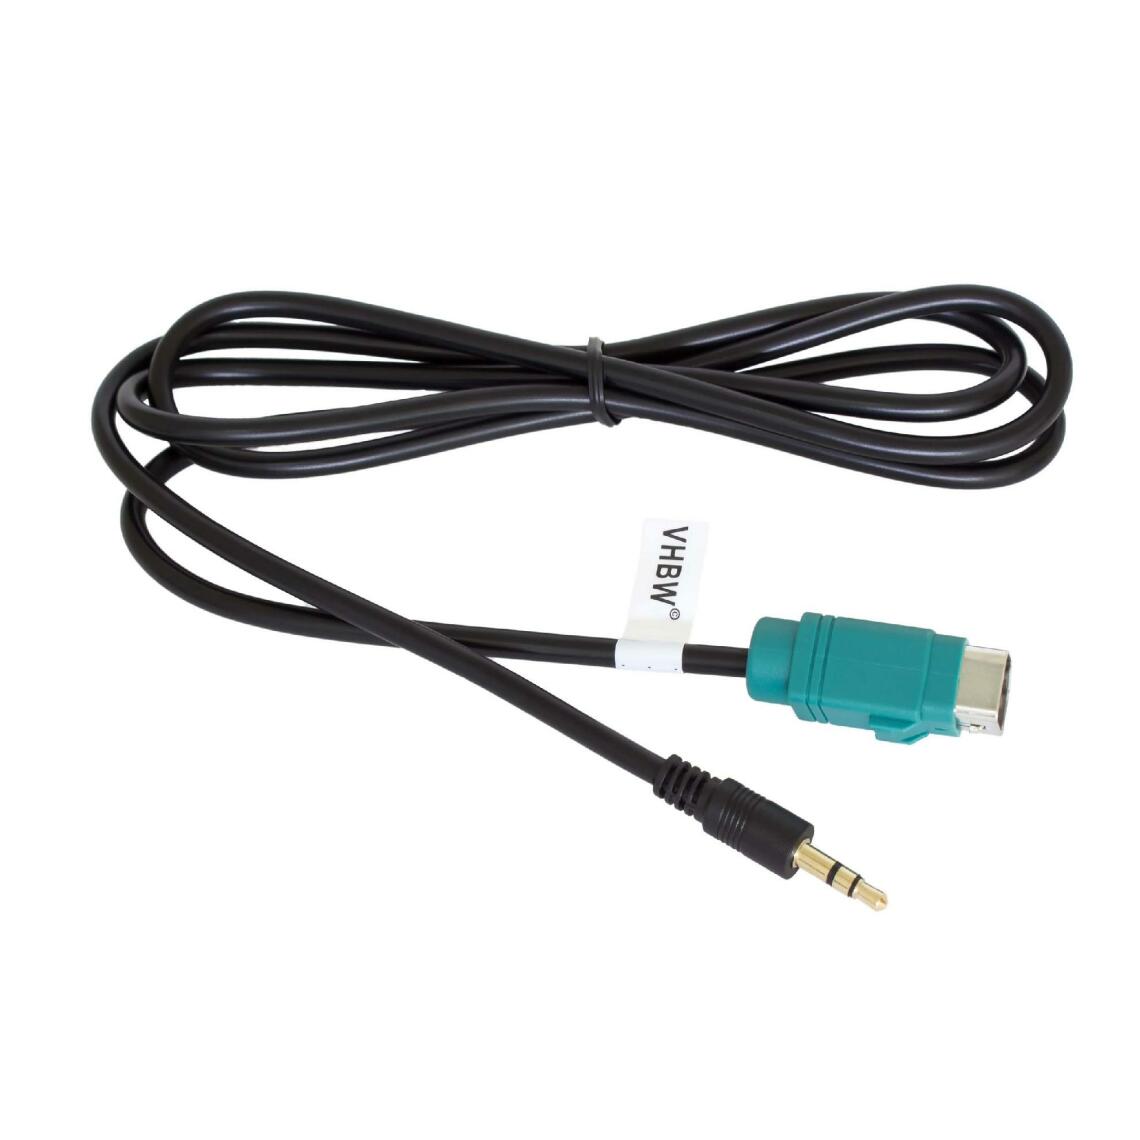 Vhbw - vhbw Câble adaptateur de ligne AUX Radio compatible avec Alpine CDE-111R/RM, CDE-112Ri, CDE-113BT, CDE-114BTi, CDE-W203Ri, IDA-X301 - USB - Alimentation modulaire